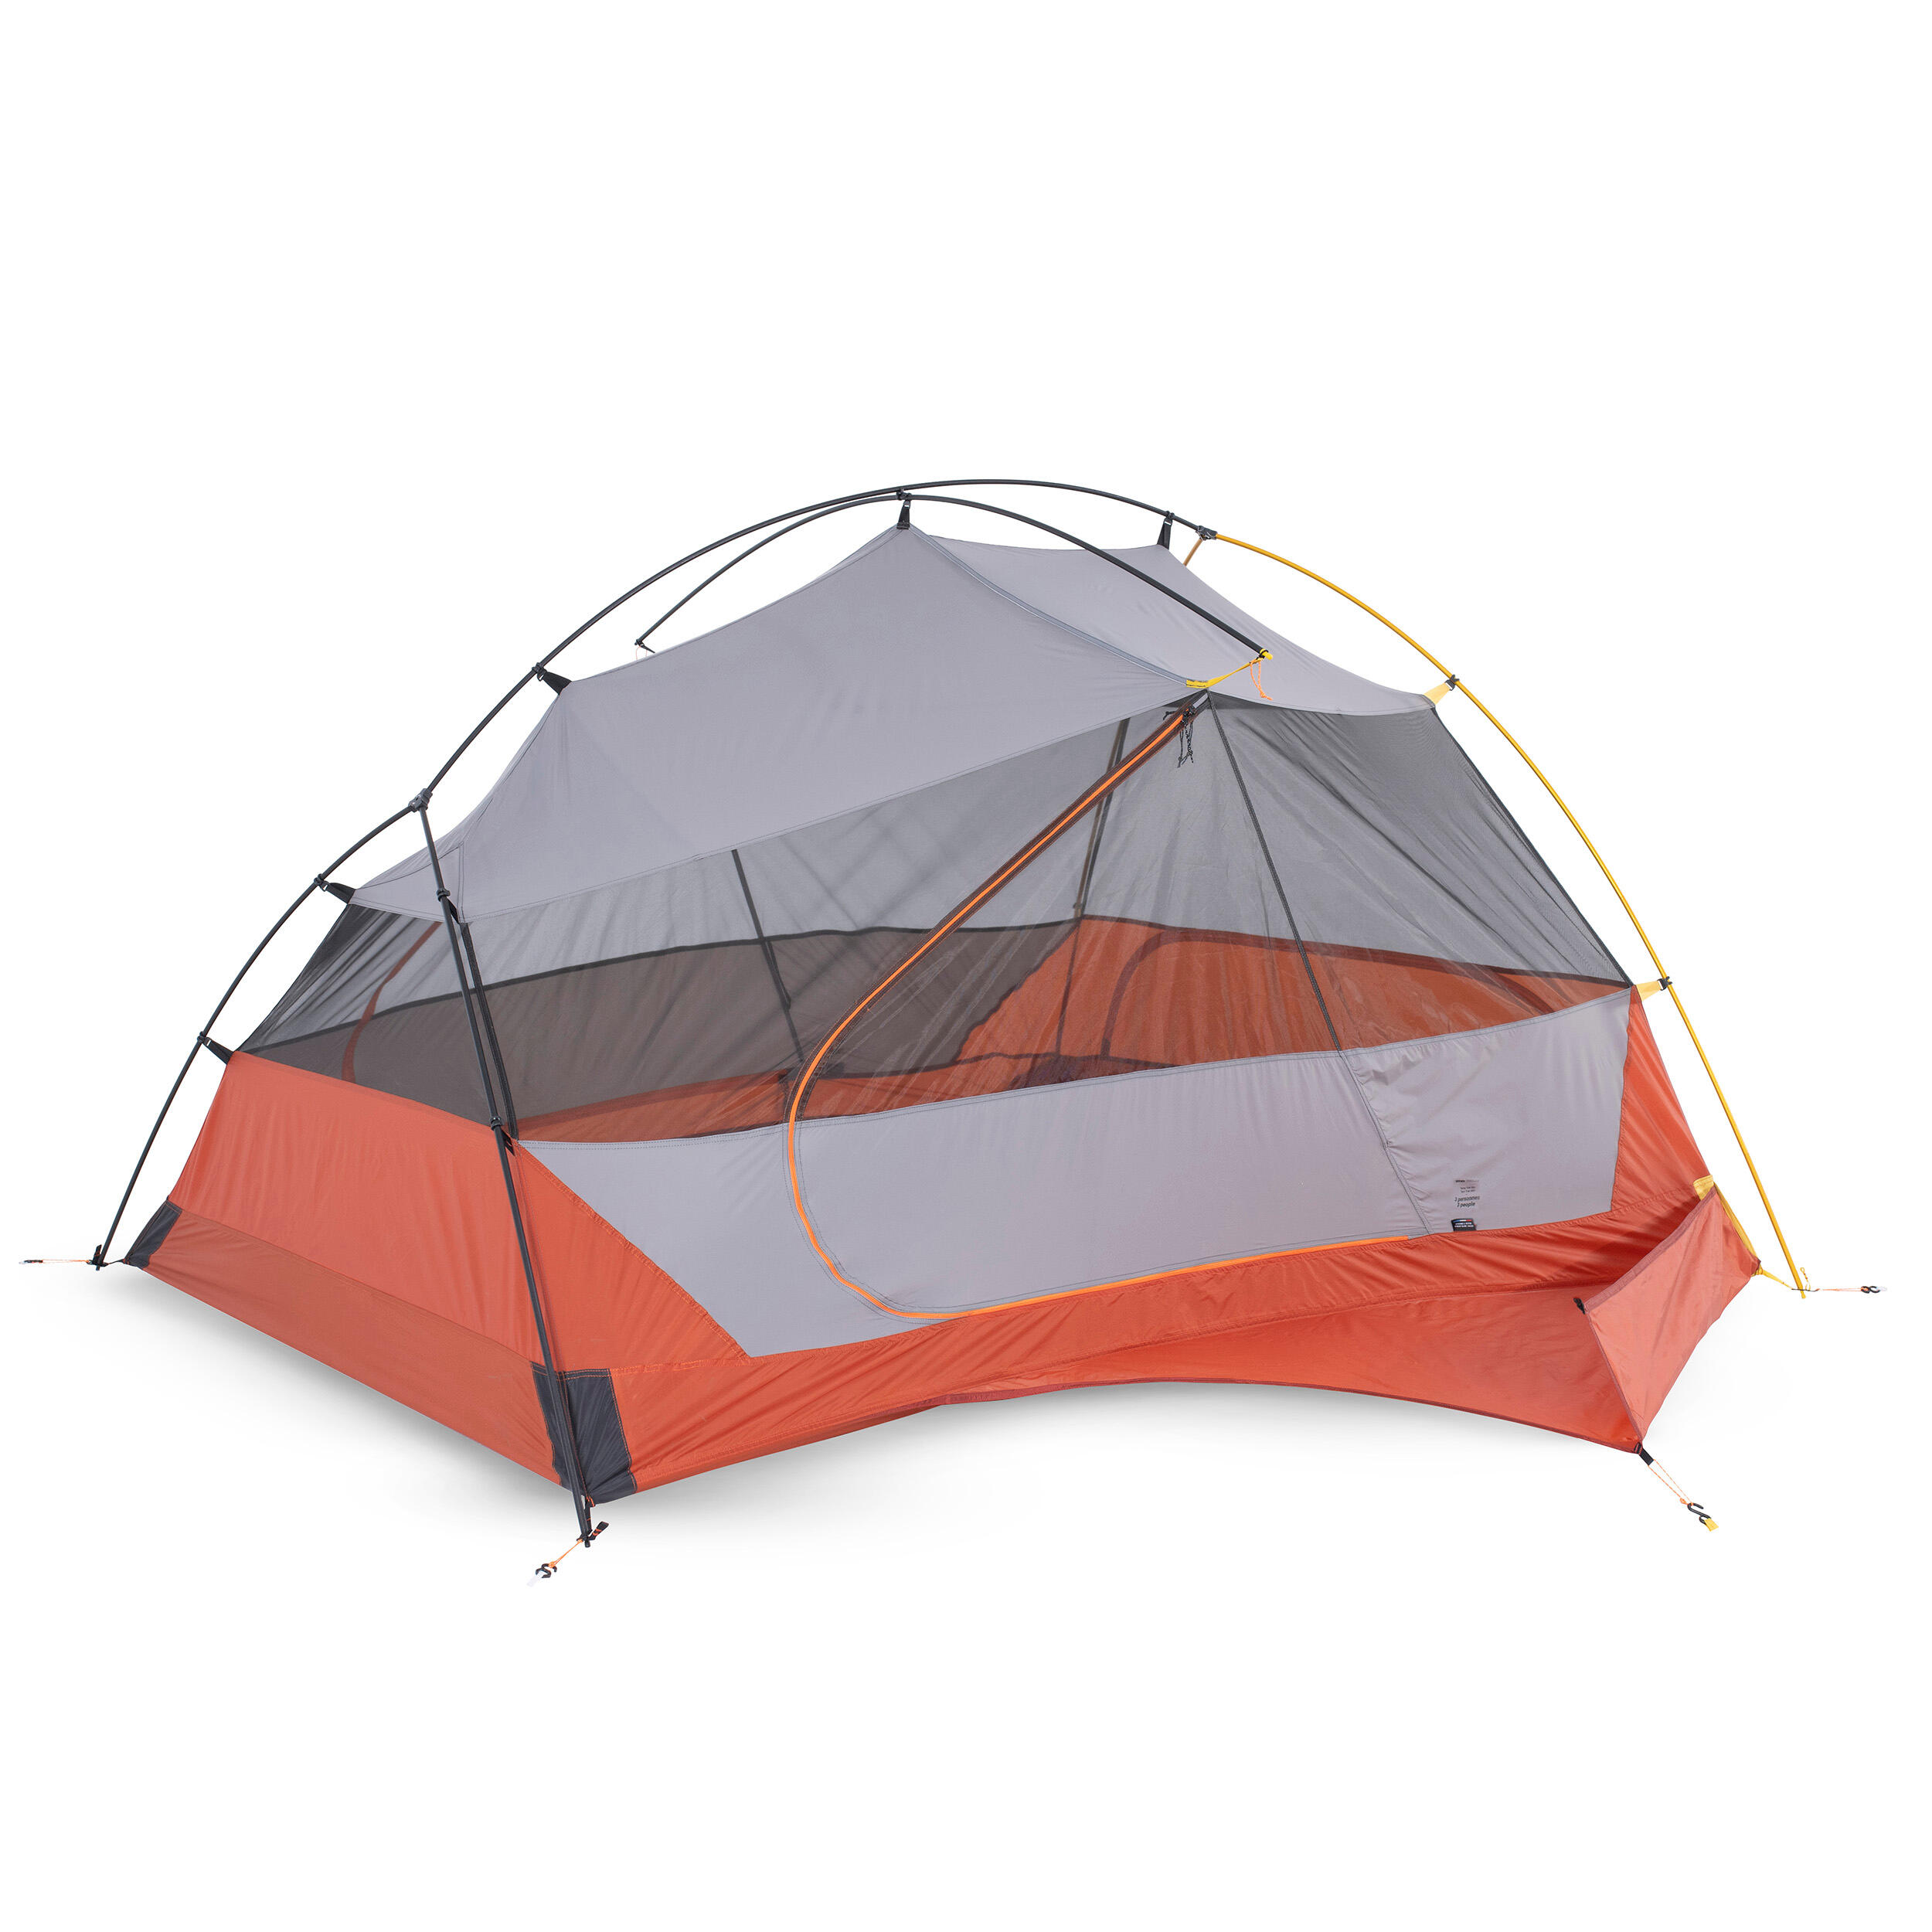 Dome Trekking Tent - 3 person - MT900 14/16